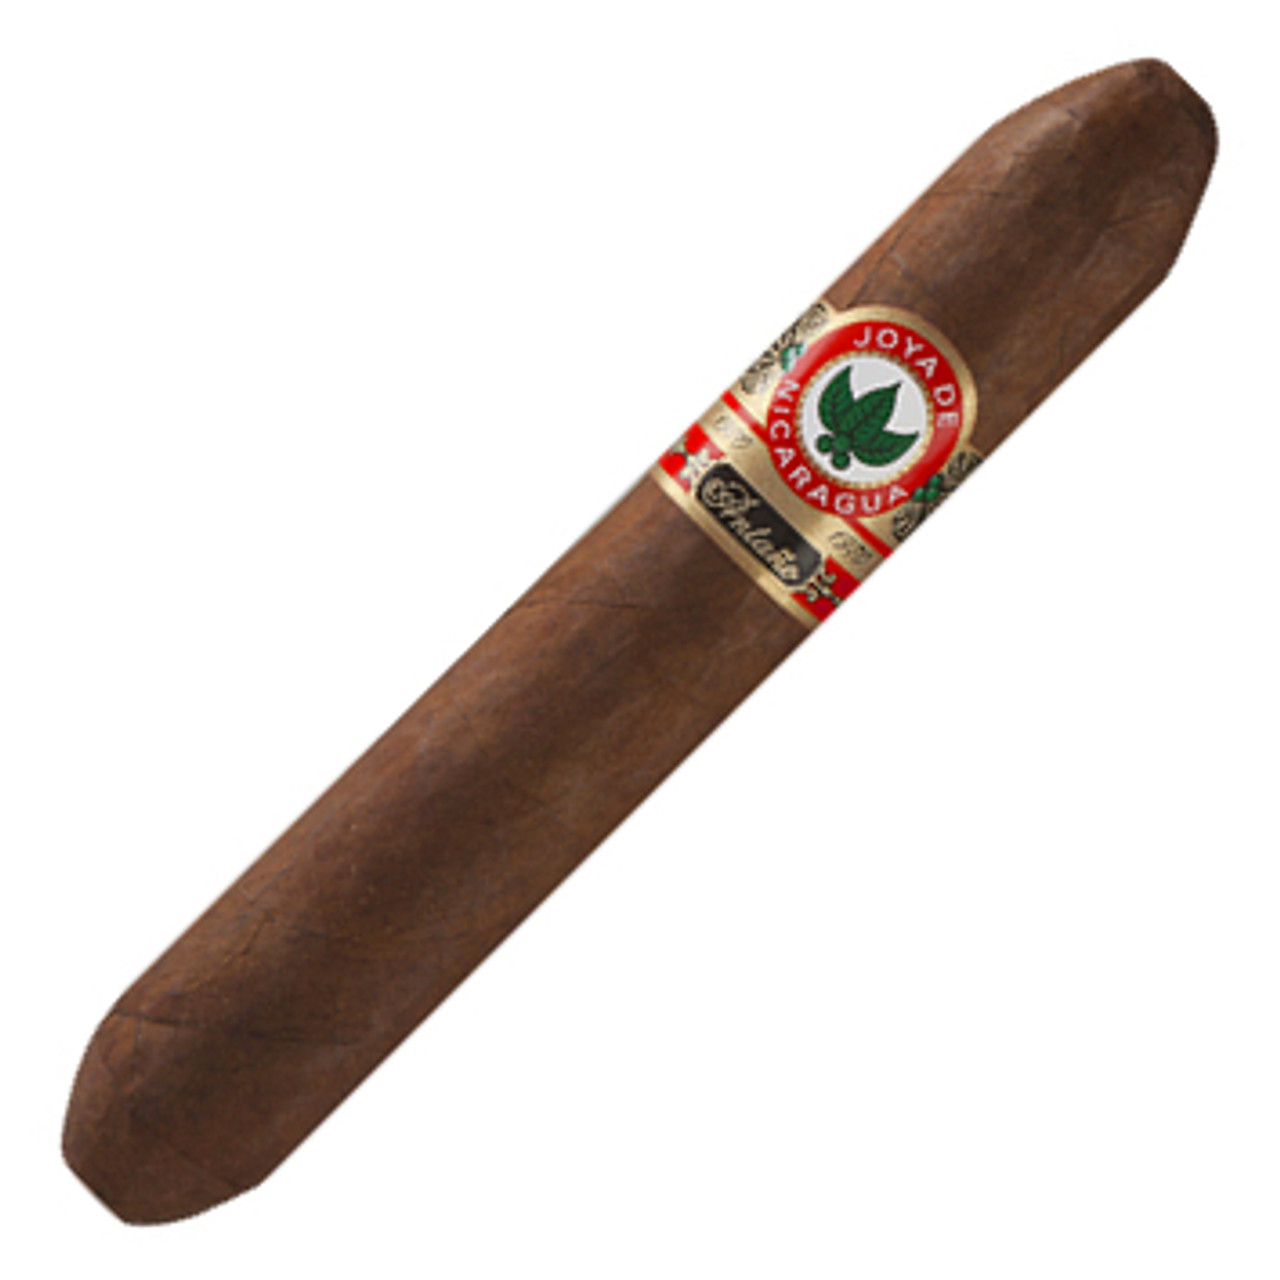 Joya de Nicaragua Antano Gran Perfecto Cigars - 6 x 60 (Box of 20)